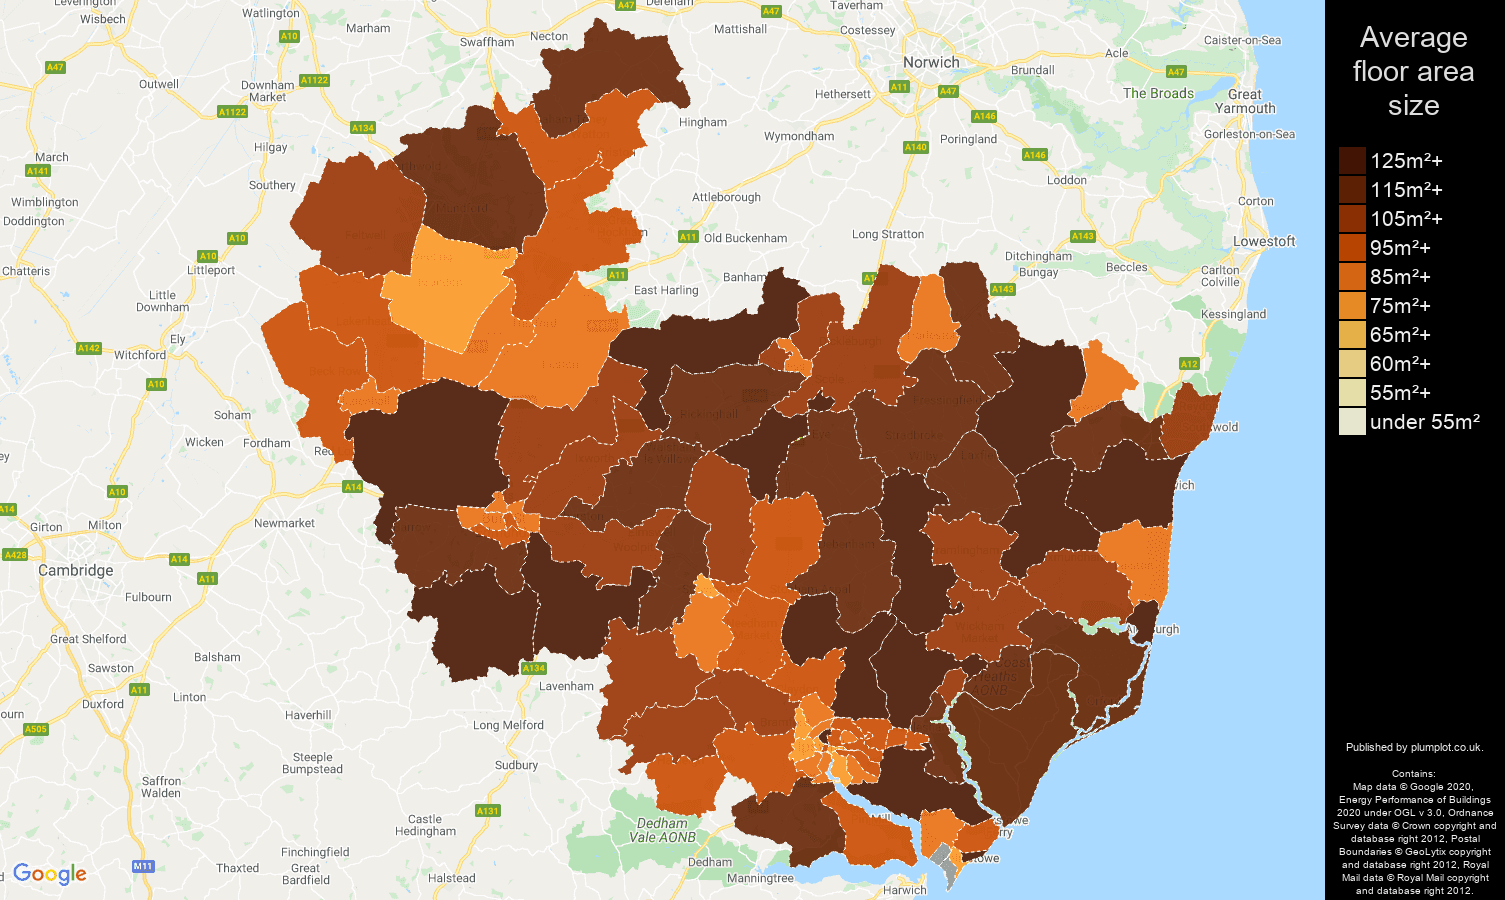 Ipswich map of average floor area size of houses